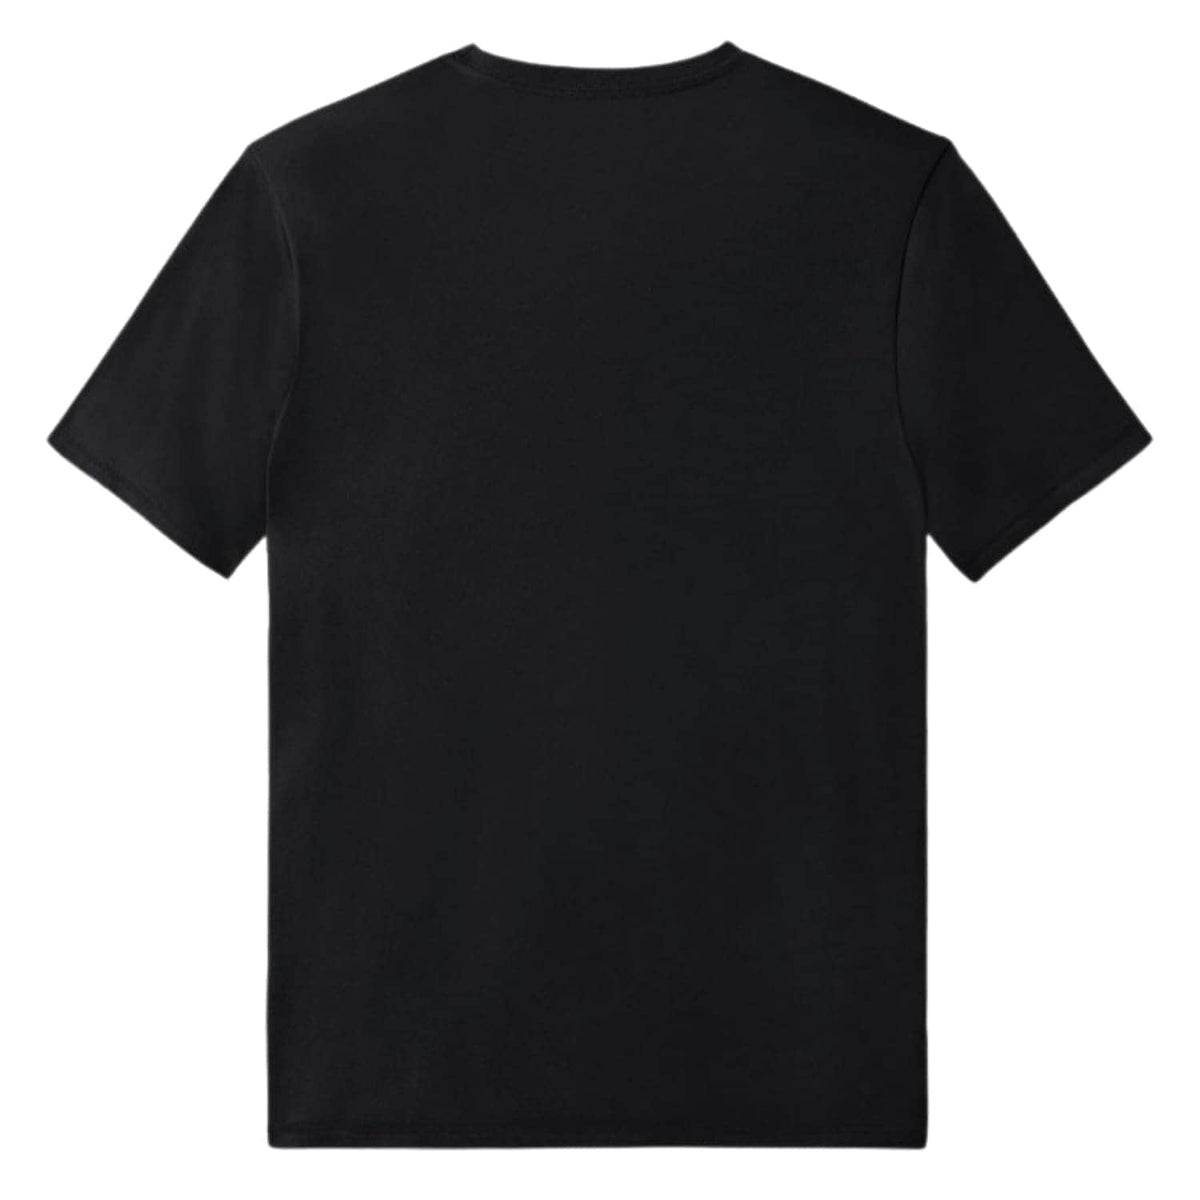 Brixton Mahlon X T-Shirt - Black - Mens Graphic T-Shirt by Brixton